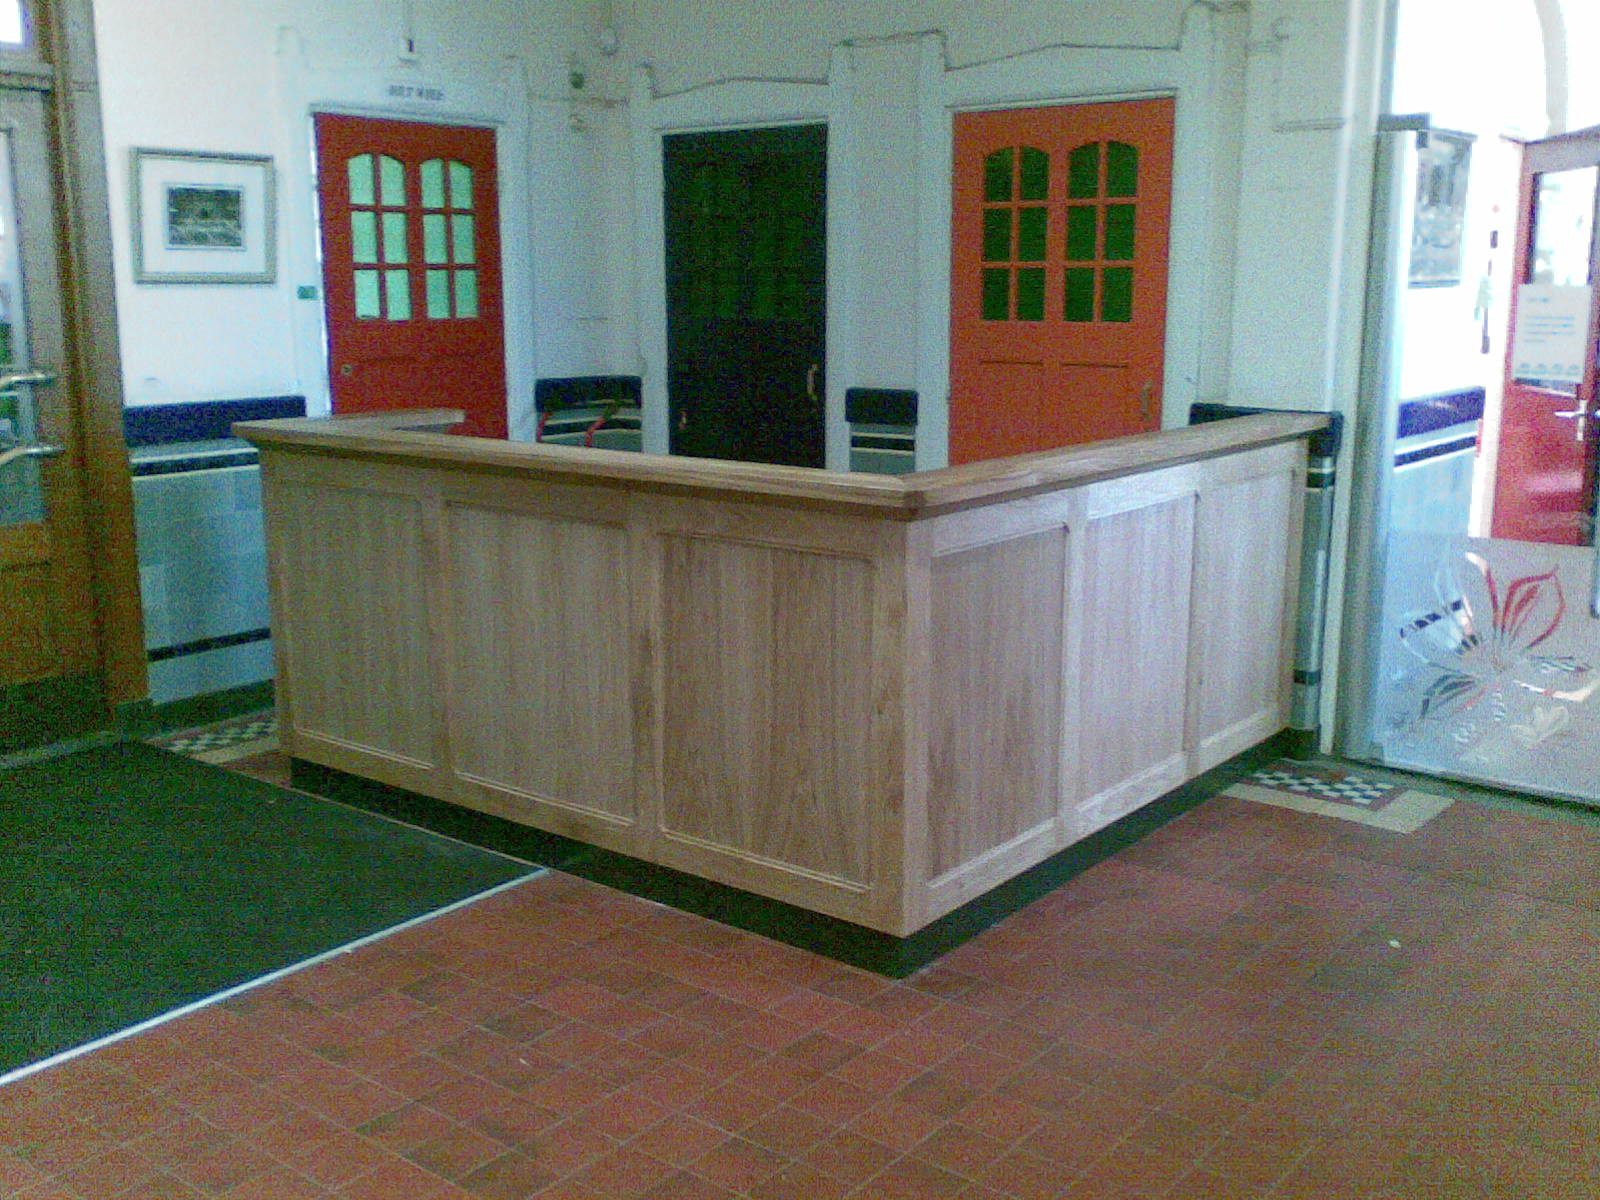 Desk for primary school - 2010